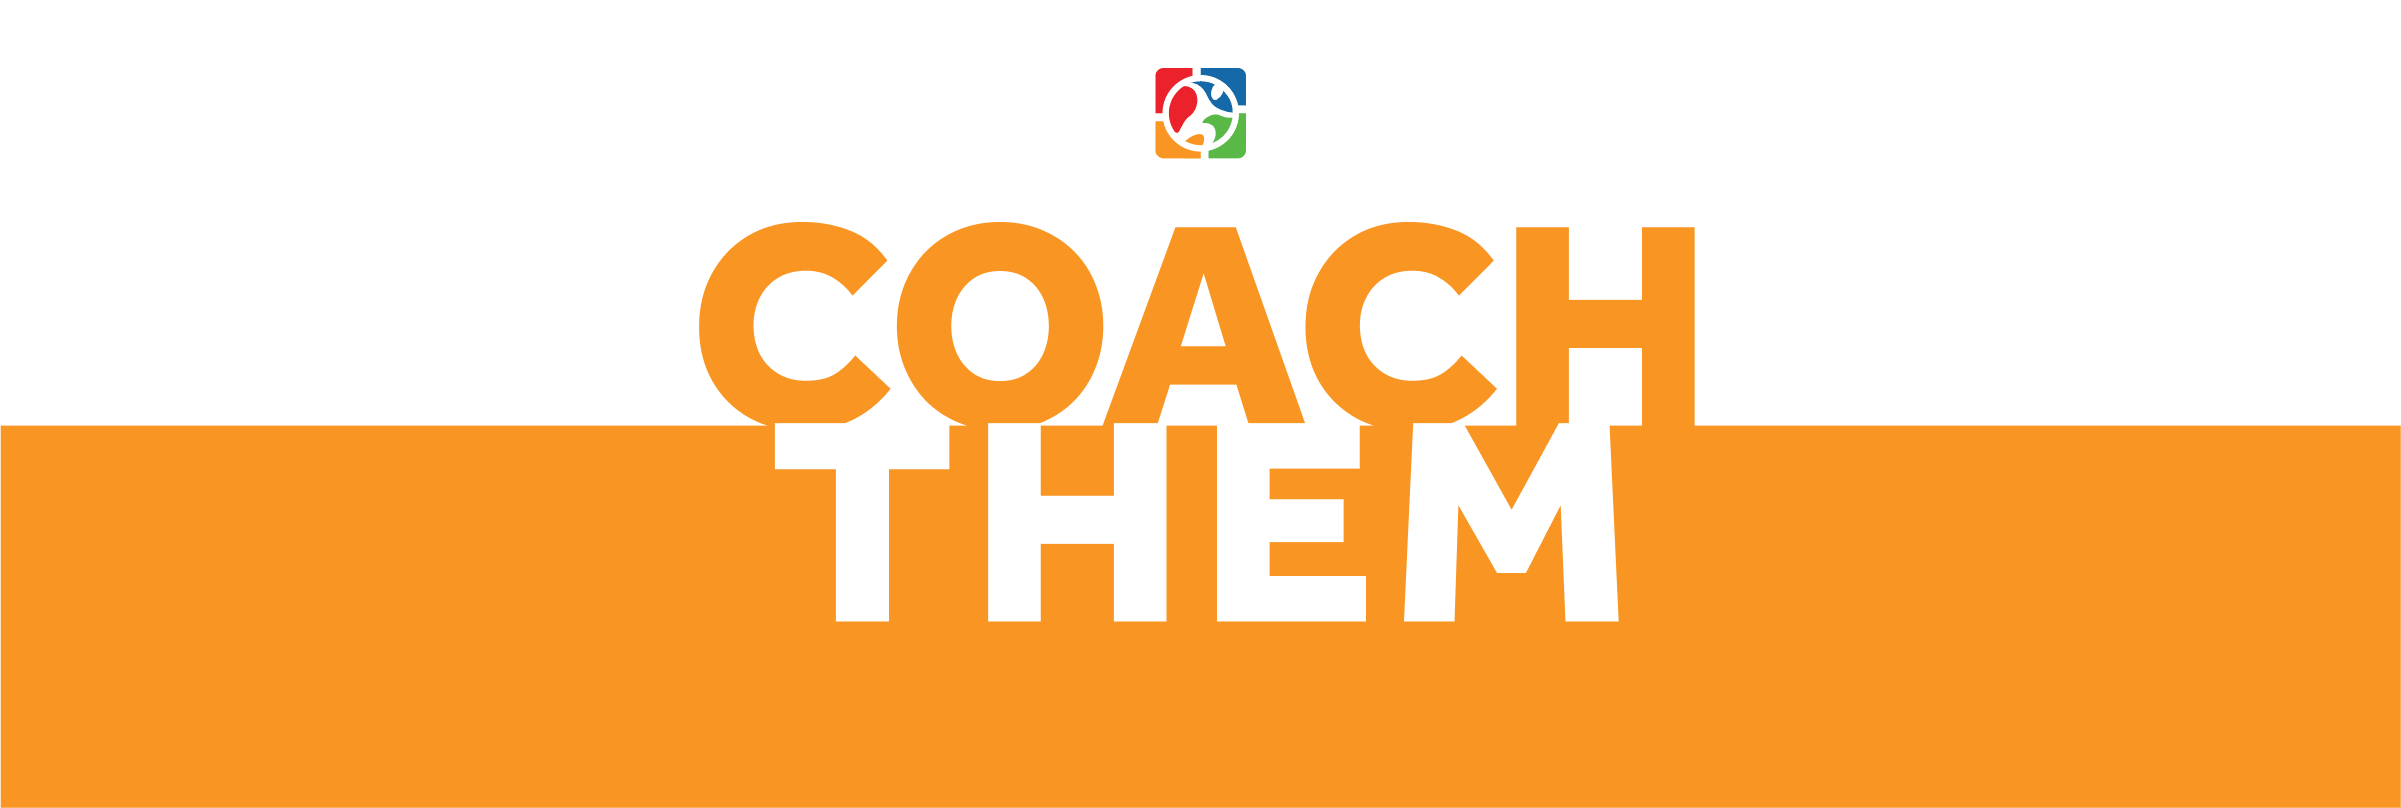 Introducing the CoachThem Rewards Program!